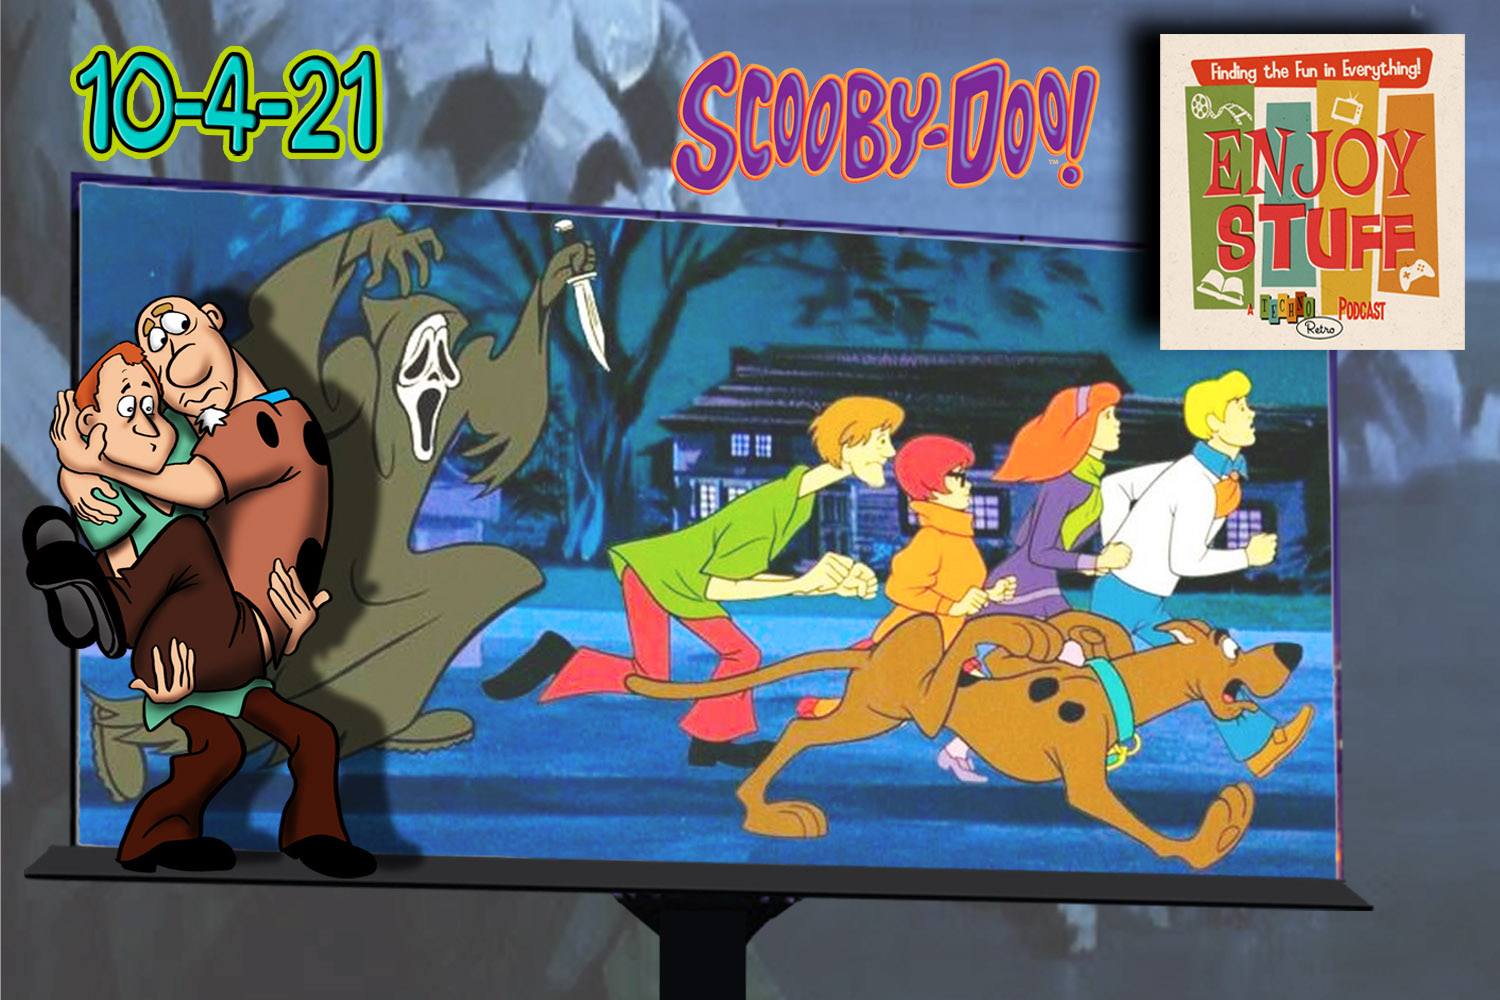 Enjoy Stuff: Scooby-Doo Meets the TechnoRetro Dads